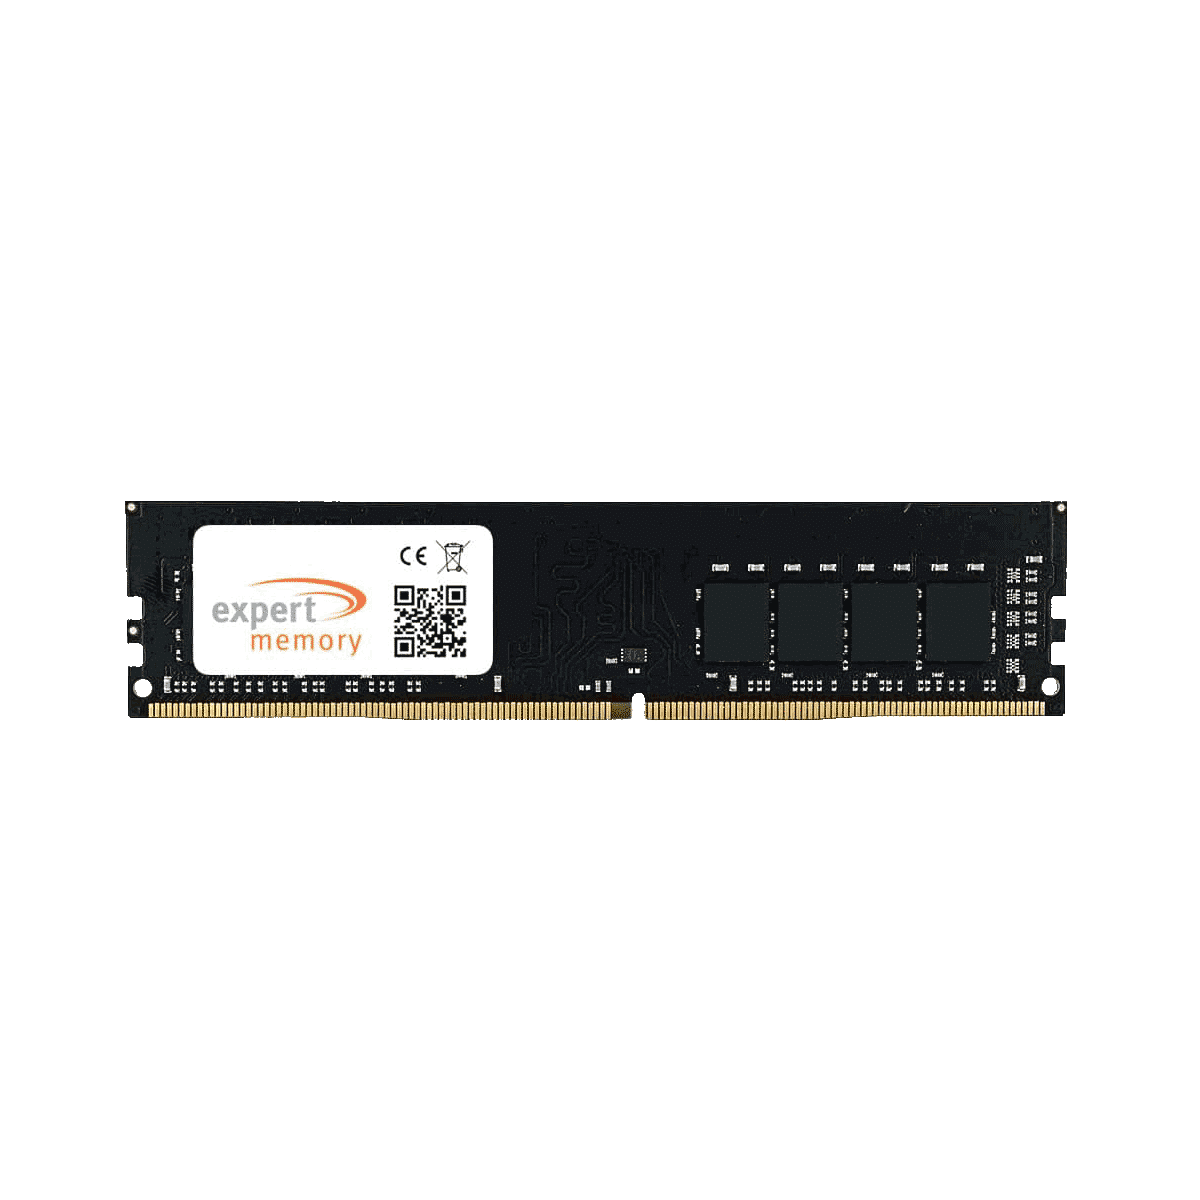 8 MEMORY EXPERT RAM Upgrade UDIMM 2Rx8 GB Z370N Mainboard Gigabyte 8GB DDR4 Memory 2400 Workstation/Desktop